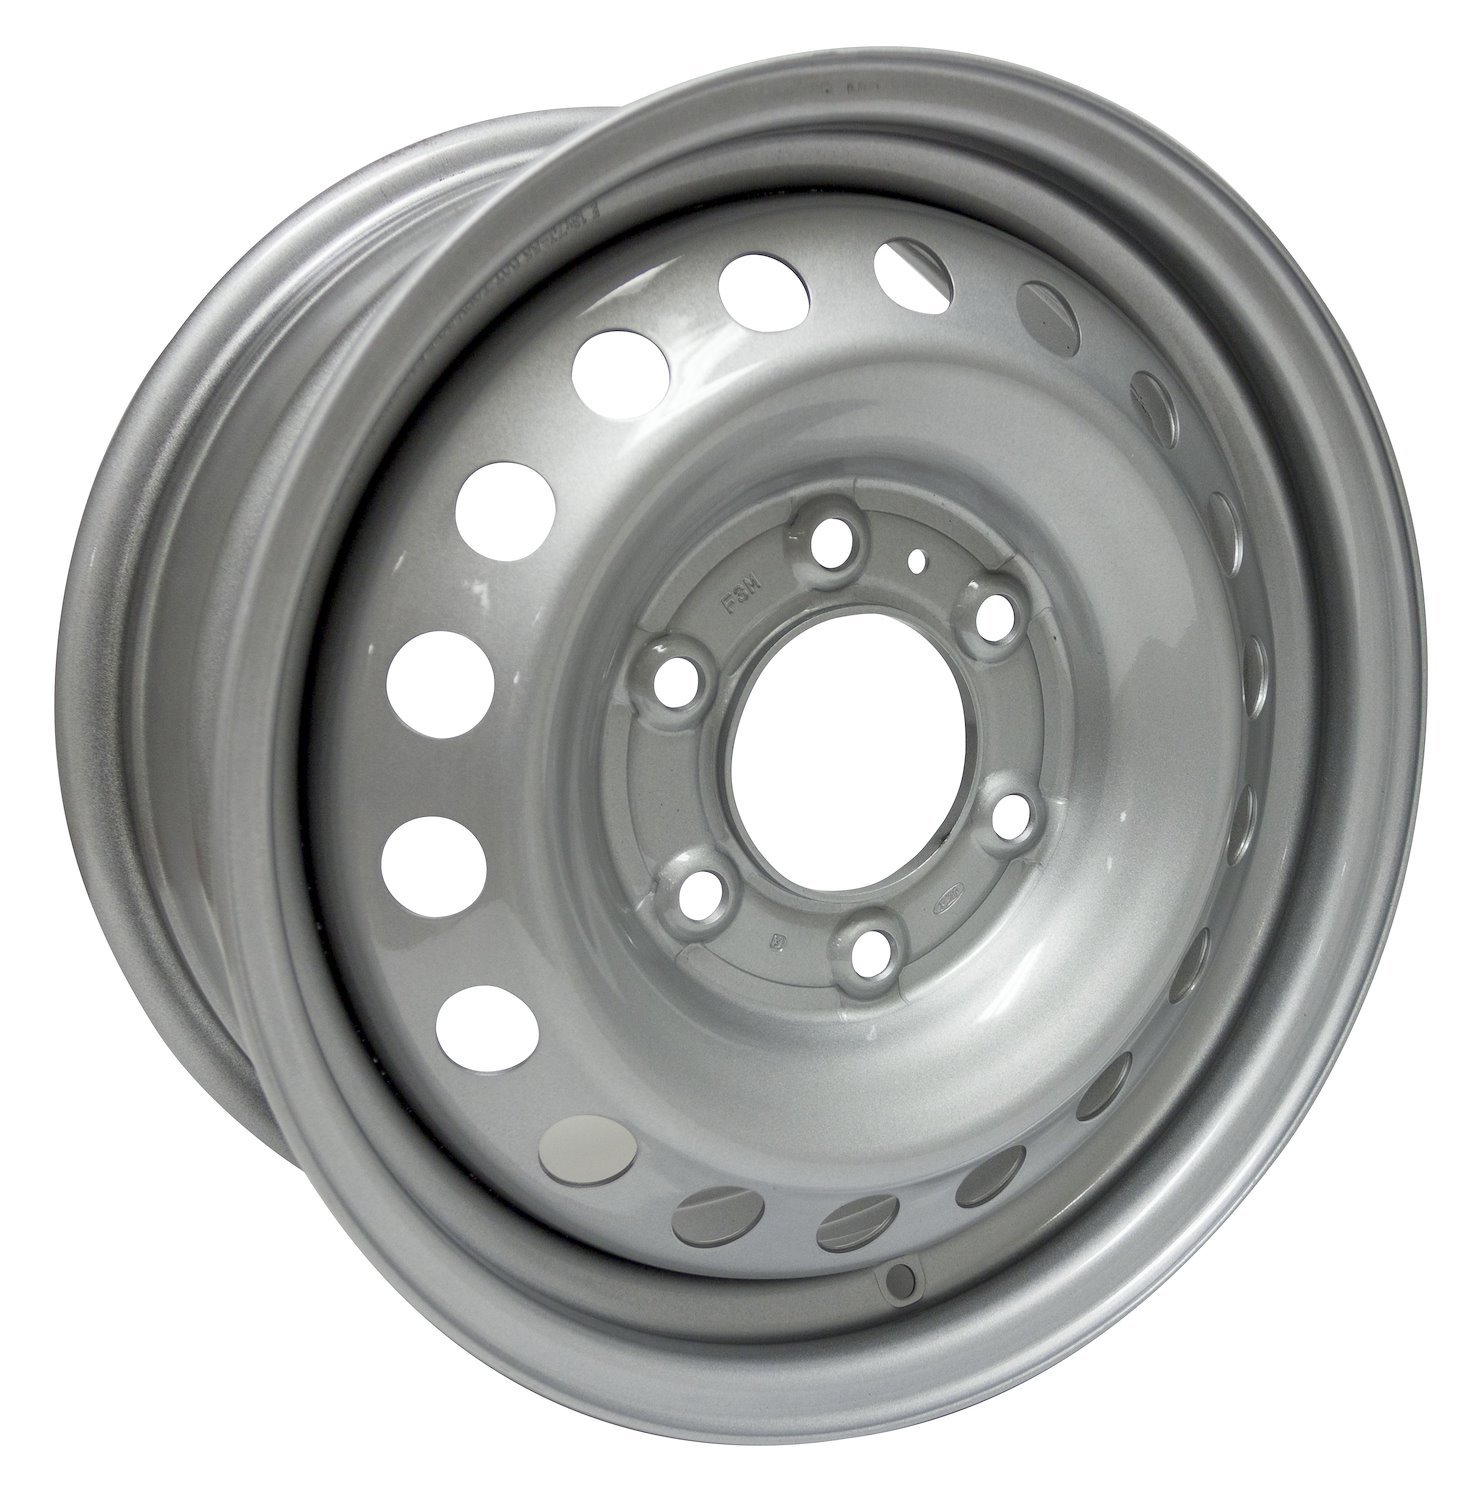 X46655 Steel Wheel [Size: 16" x 7"] Grey Finish